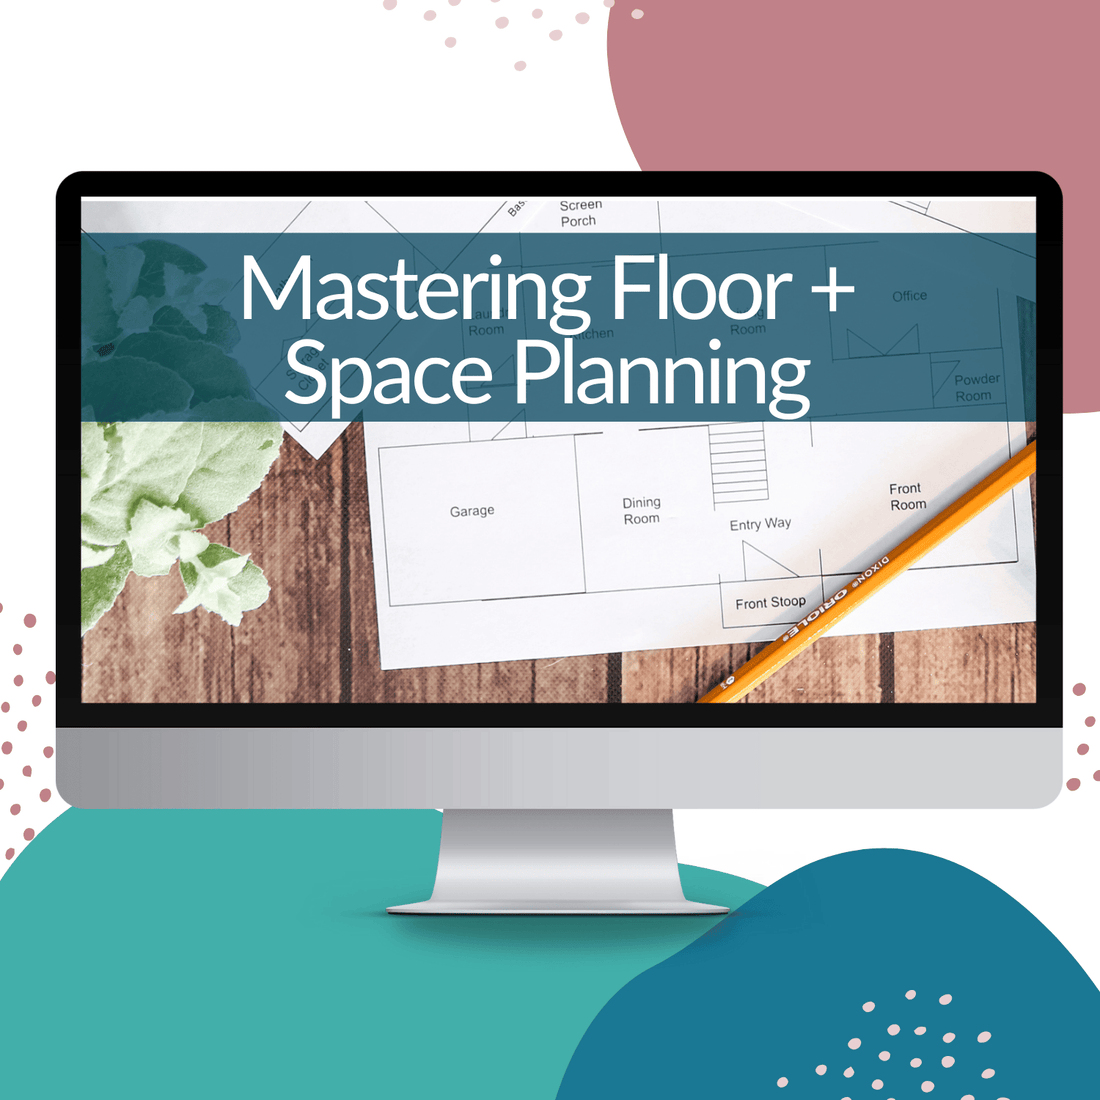 Mastering Floor and Space Planning Workshop